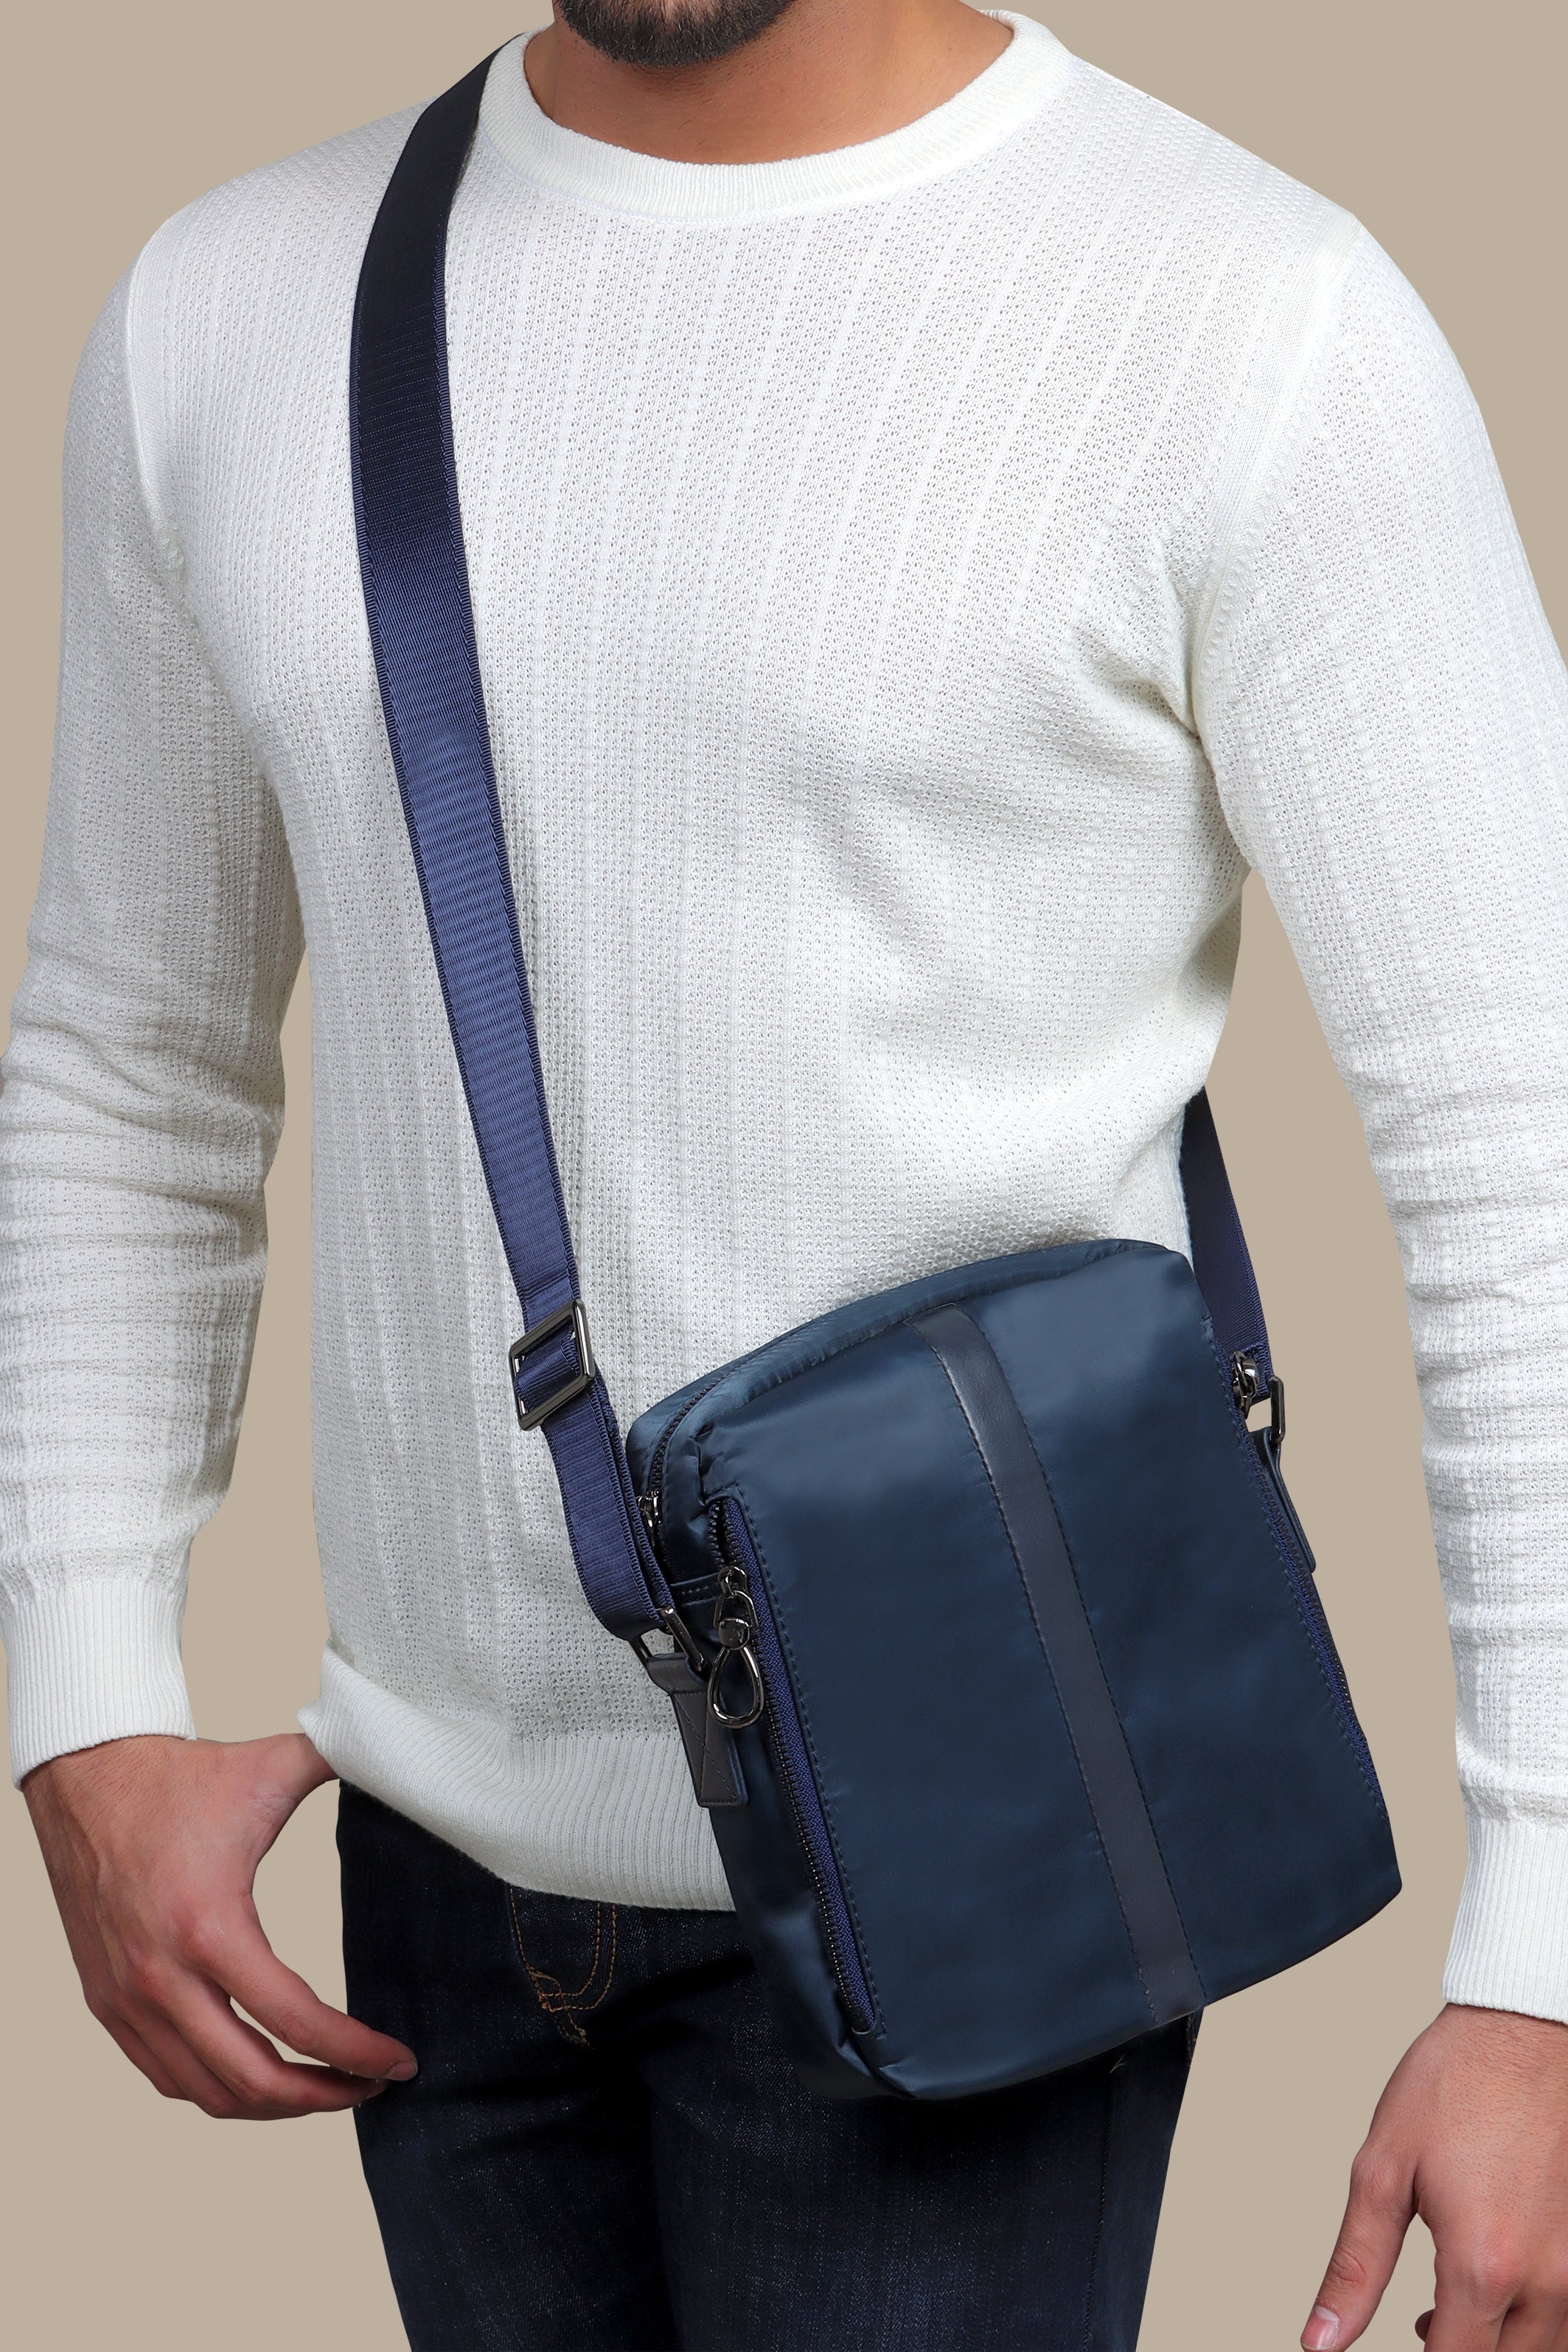 Blue Horizon: Stylish Nylon Cross bag for Everyday Adventures